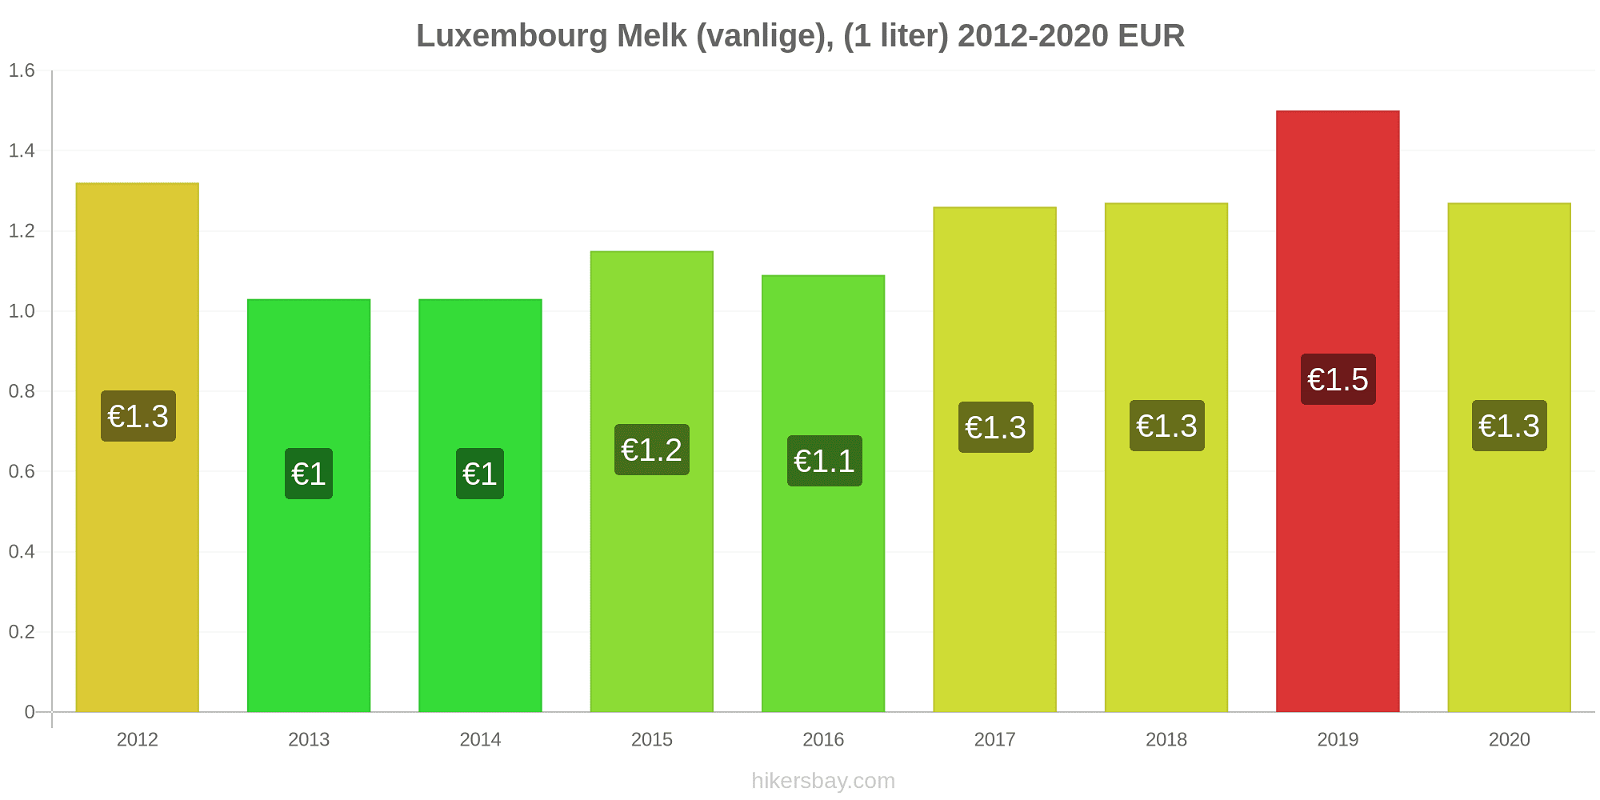 Luxembourg prisendringer Melk (vanlige), (1 liter) hikersbay.com